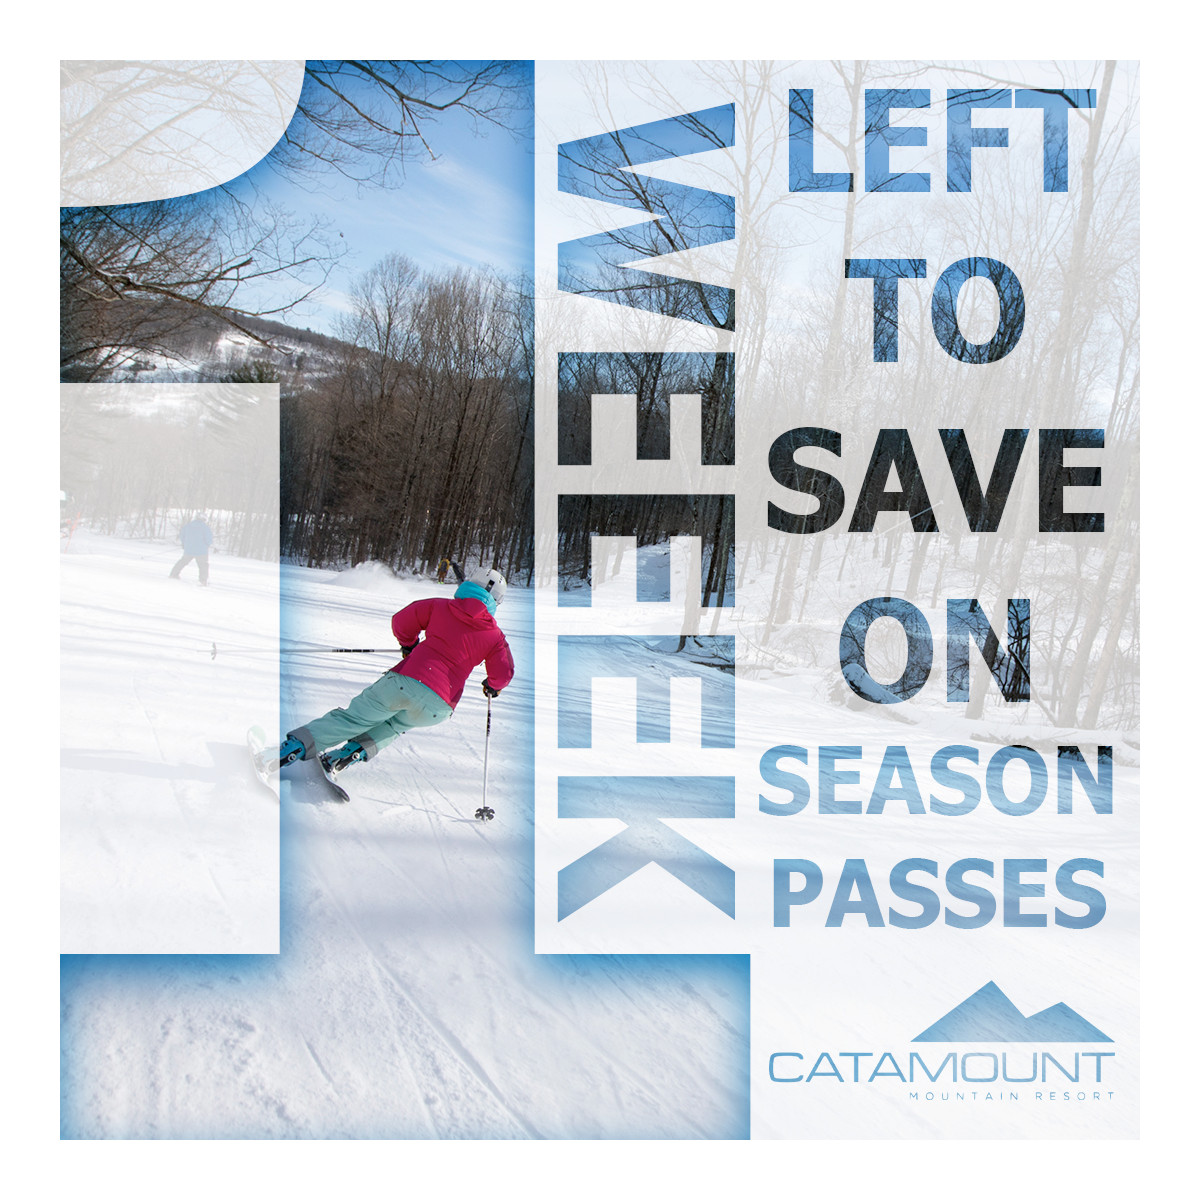 1 week left to save on catamount season passes image